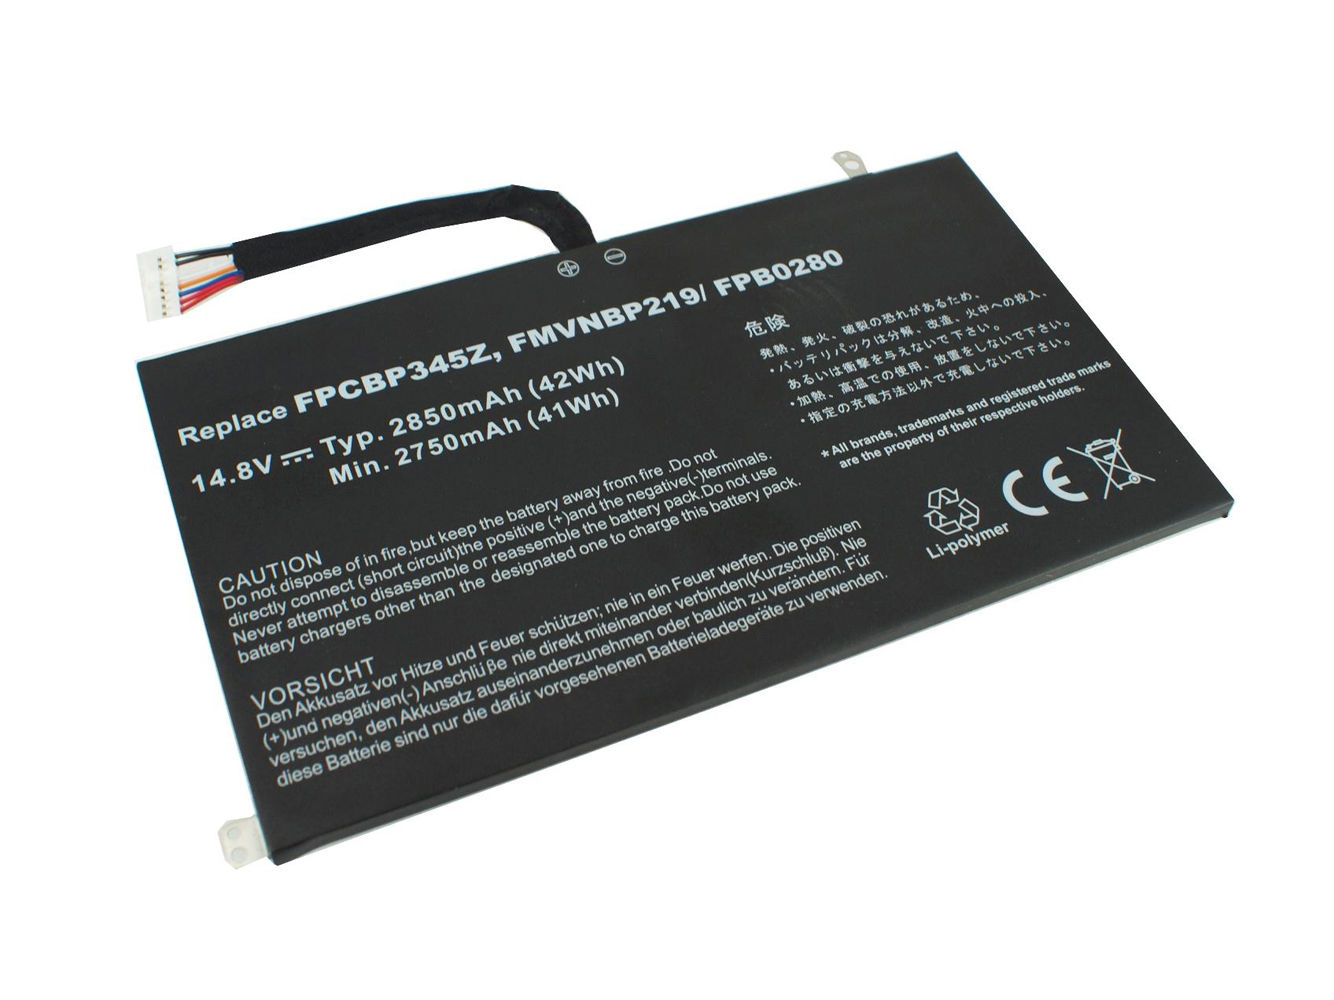 2850mAh Fujitsu UH572 FMVNBP219 FPB0280 FPCBP345Z batteria compatibile